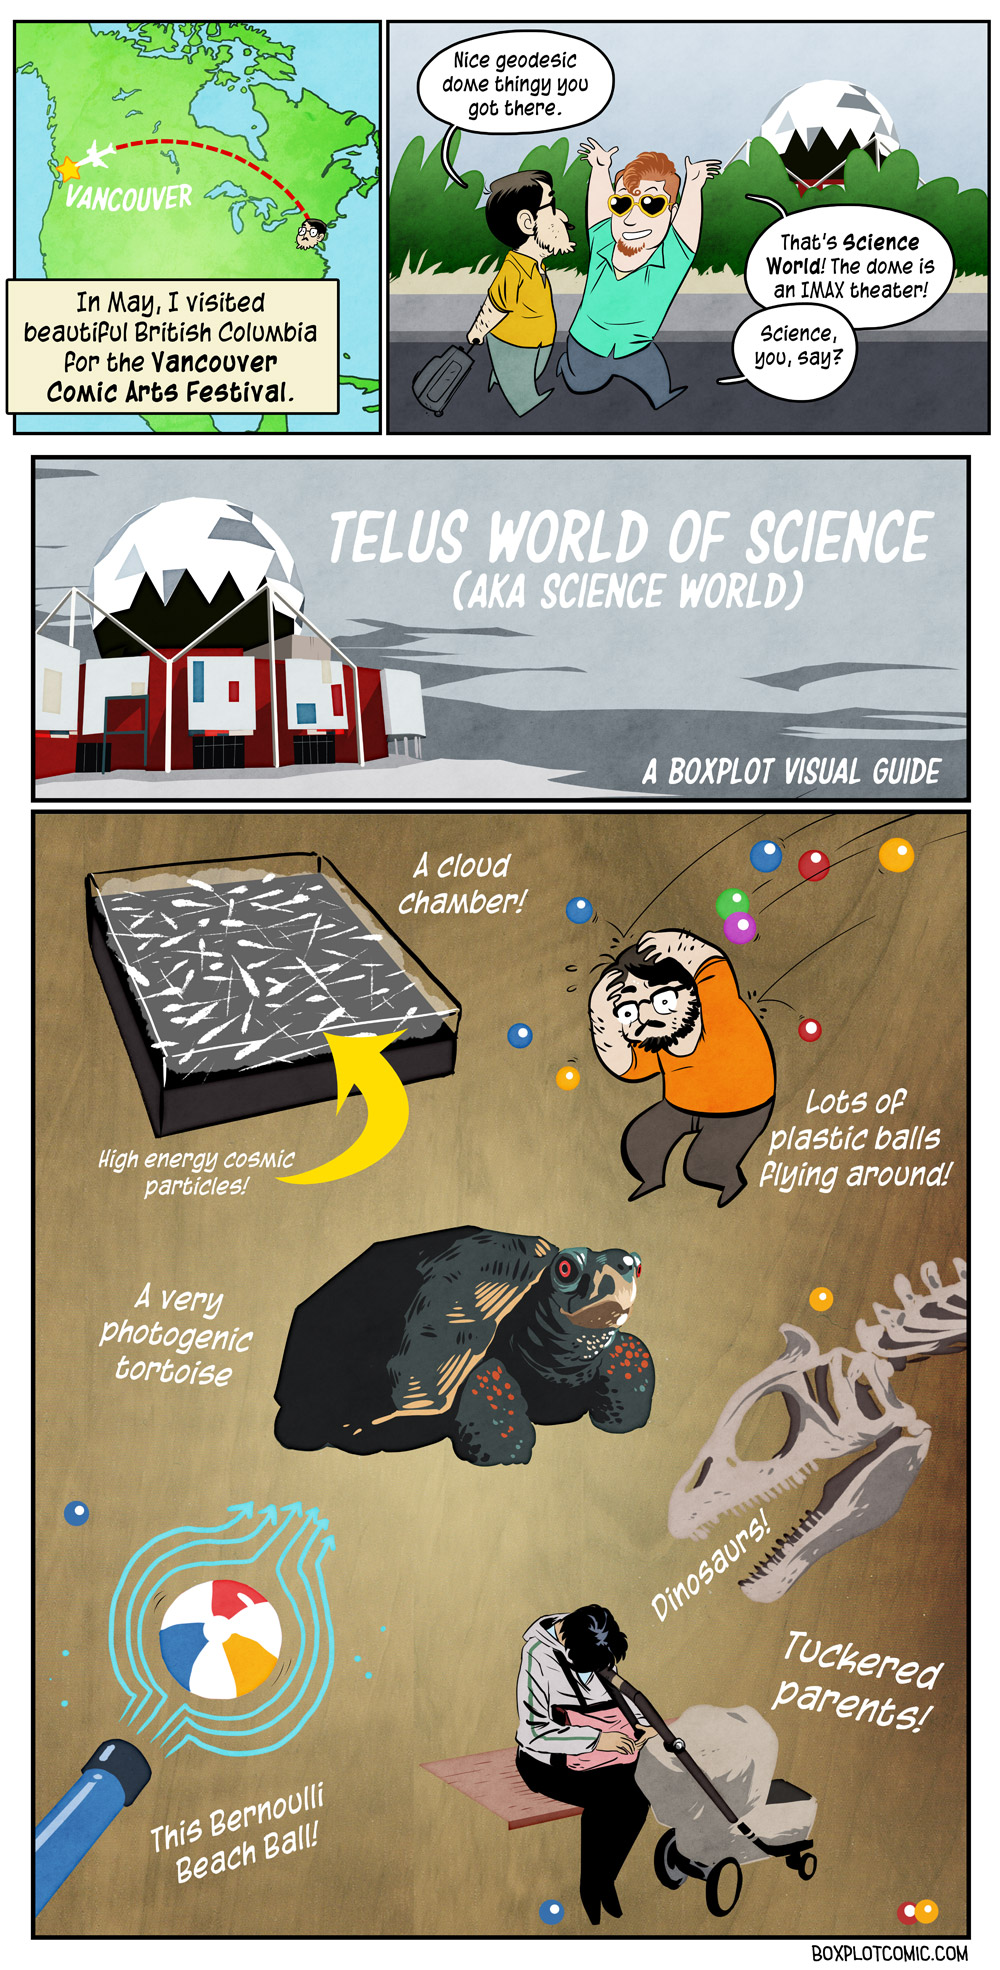 Science World!